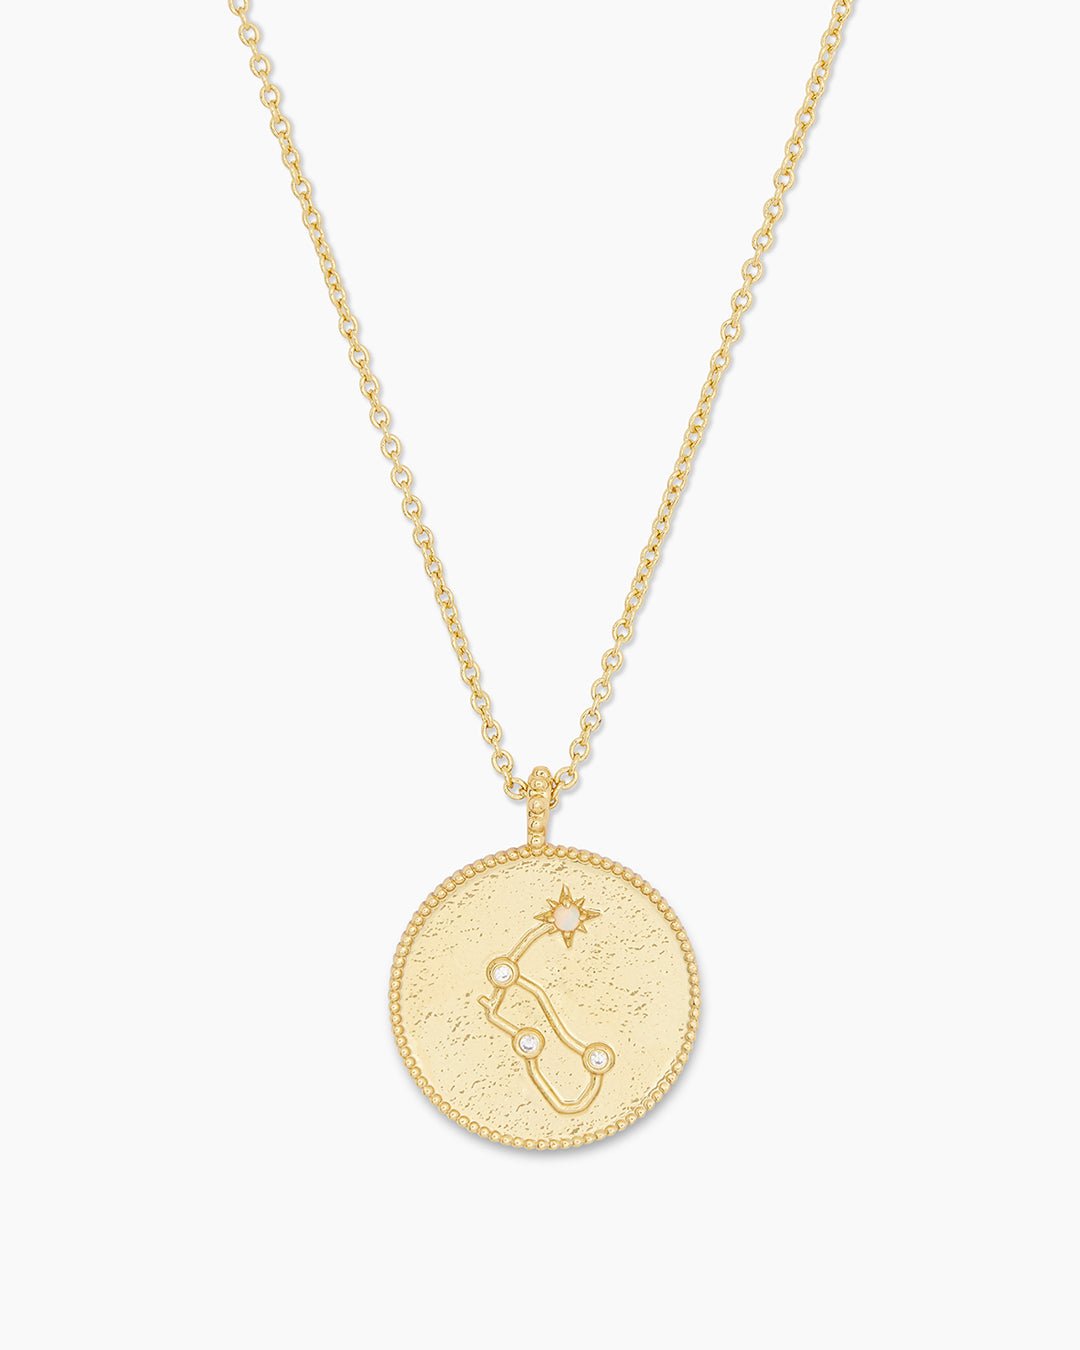  Astrology Coin Necklace (Aquarius) || option::Gold Plated, Aquarius